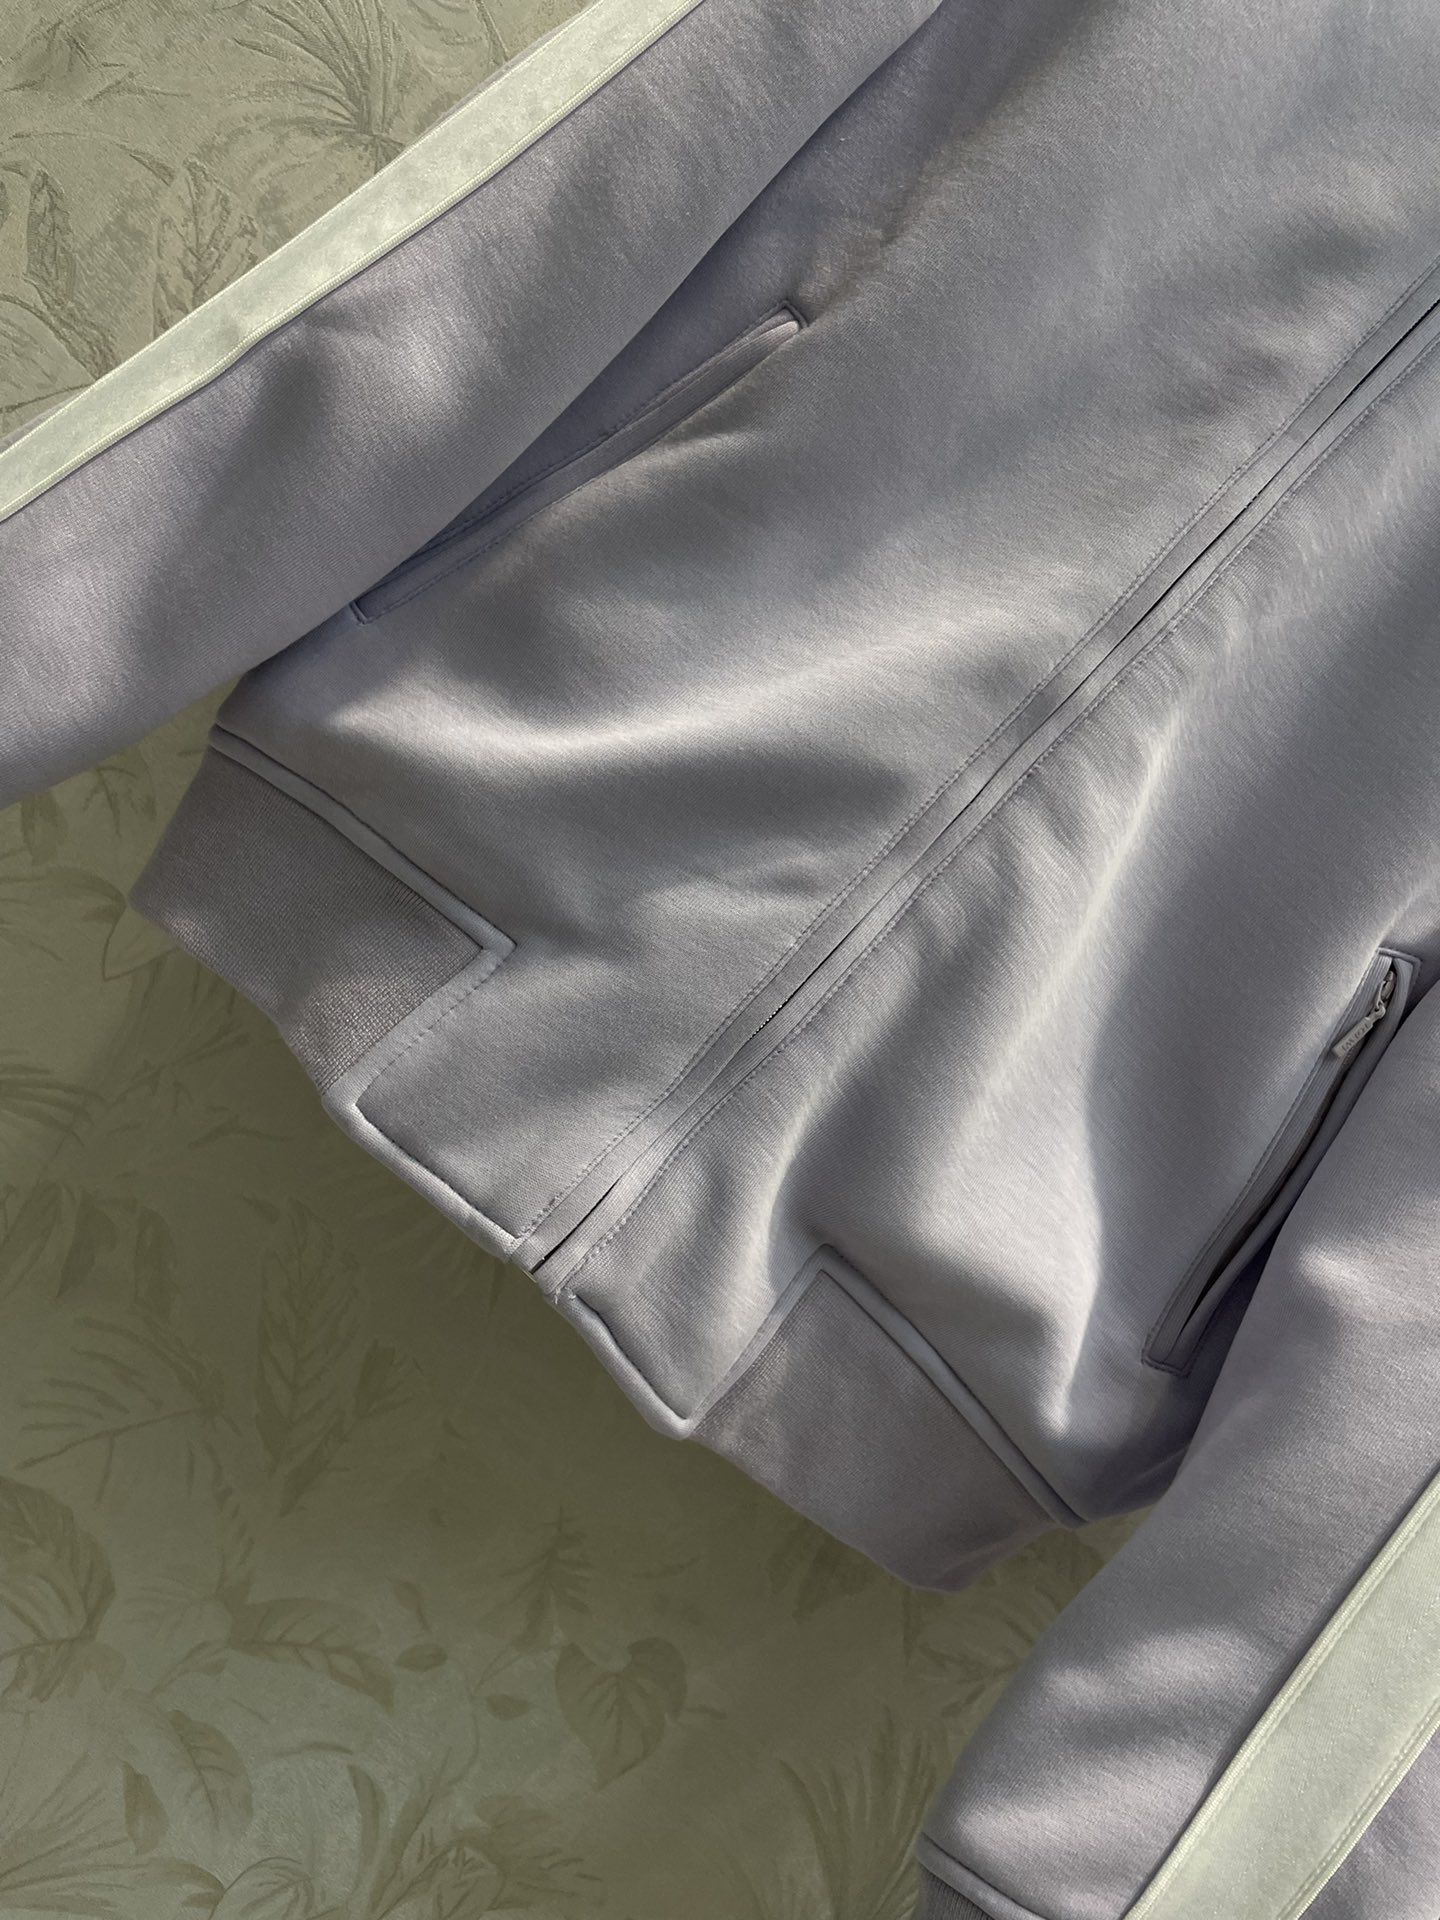 LW24春夏淡紫色运动套装休闲运动全兼备夹克外套搭配阔腿长裤版型非常不挑人颜色也是超显白撞色的白条彰显线